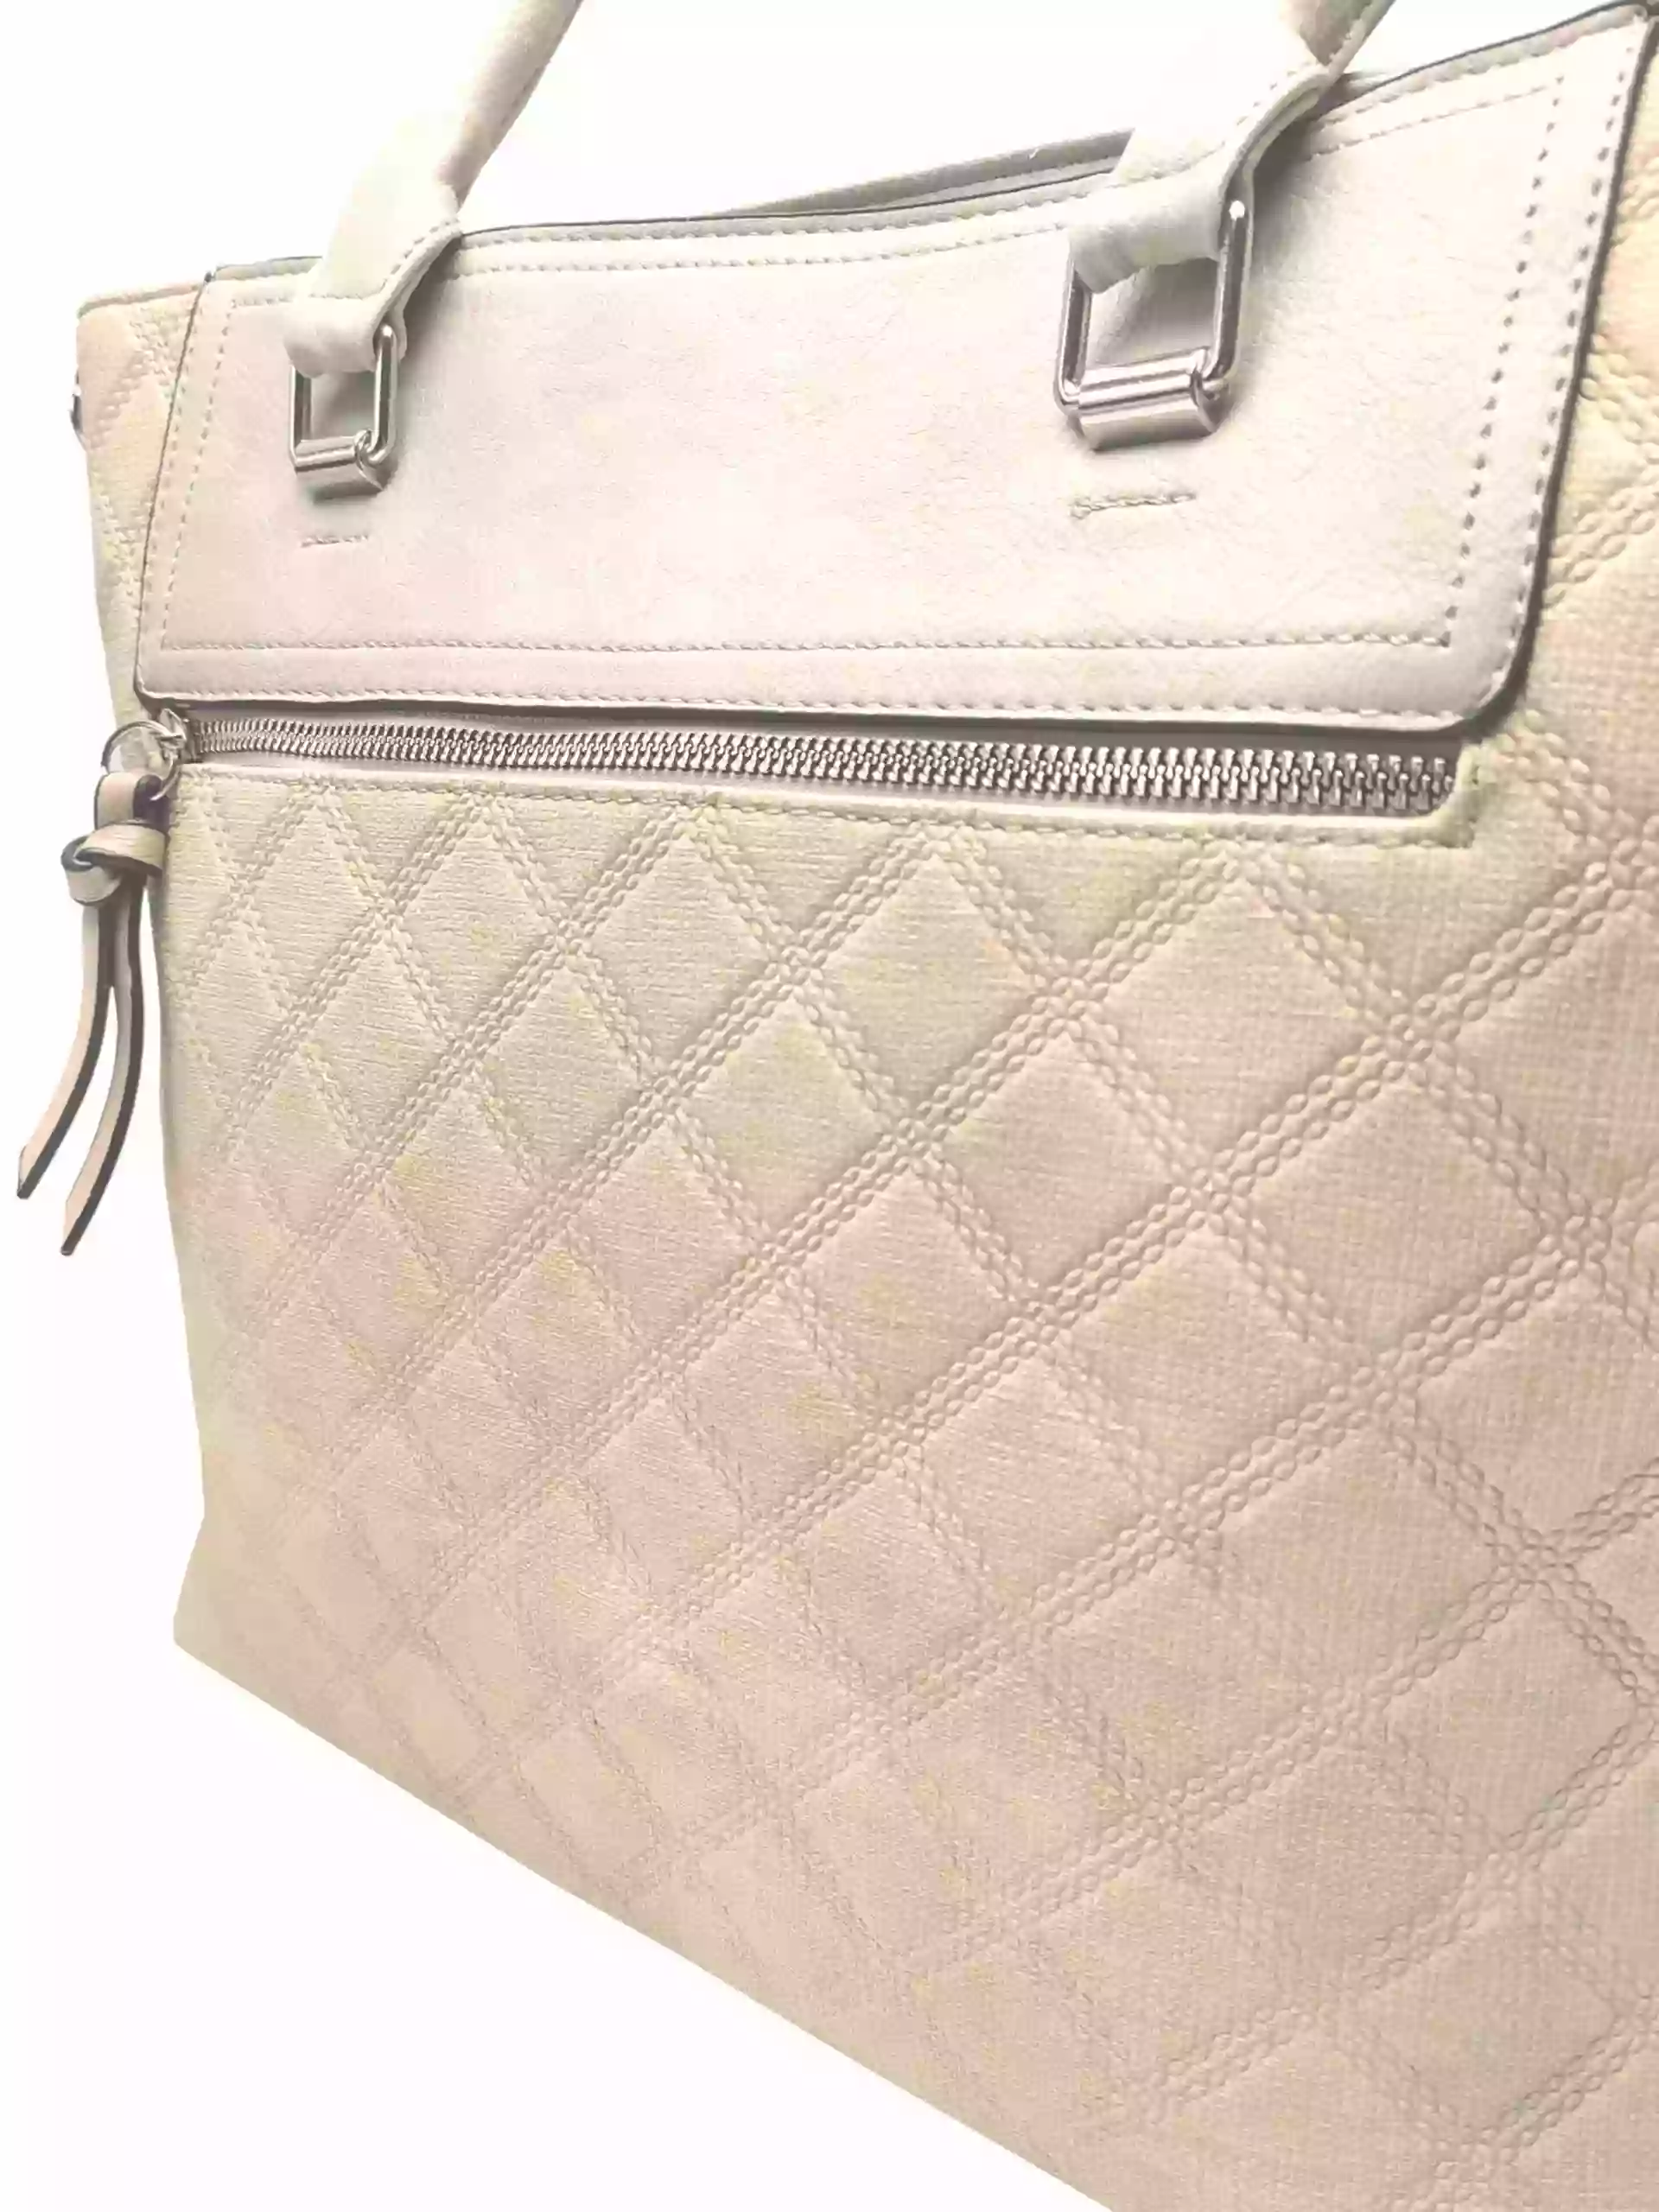 Béžová kabelka s kosočtvercovým vzorem, Tapple, H190014, detail kabelky do ruky